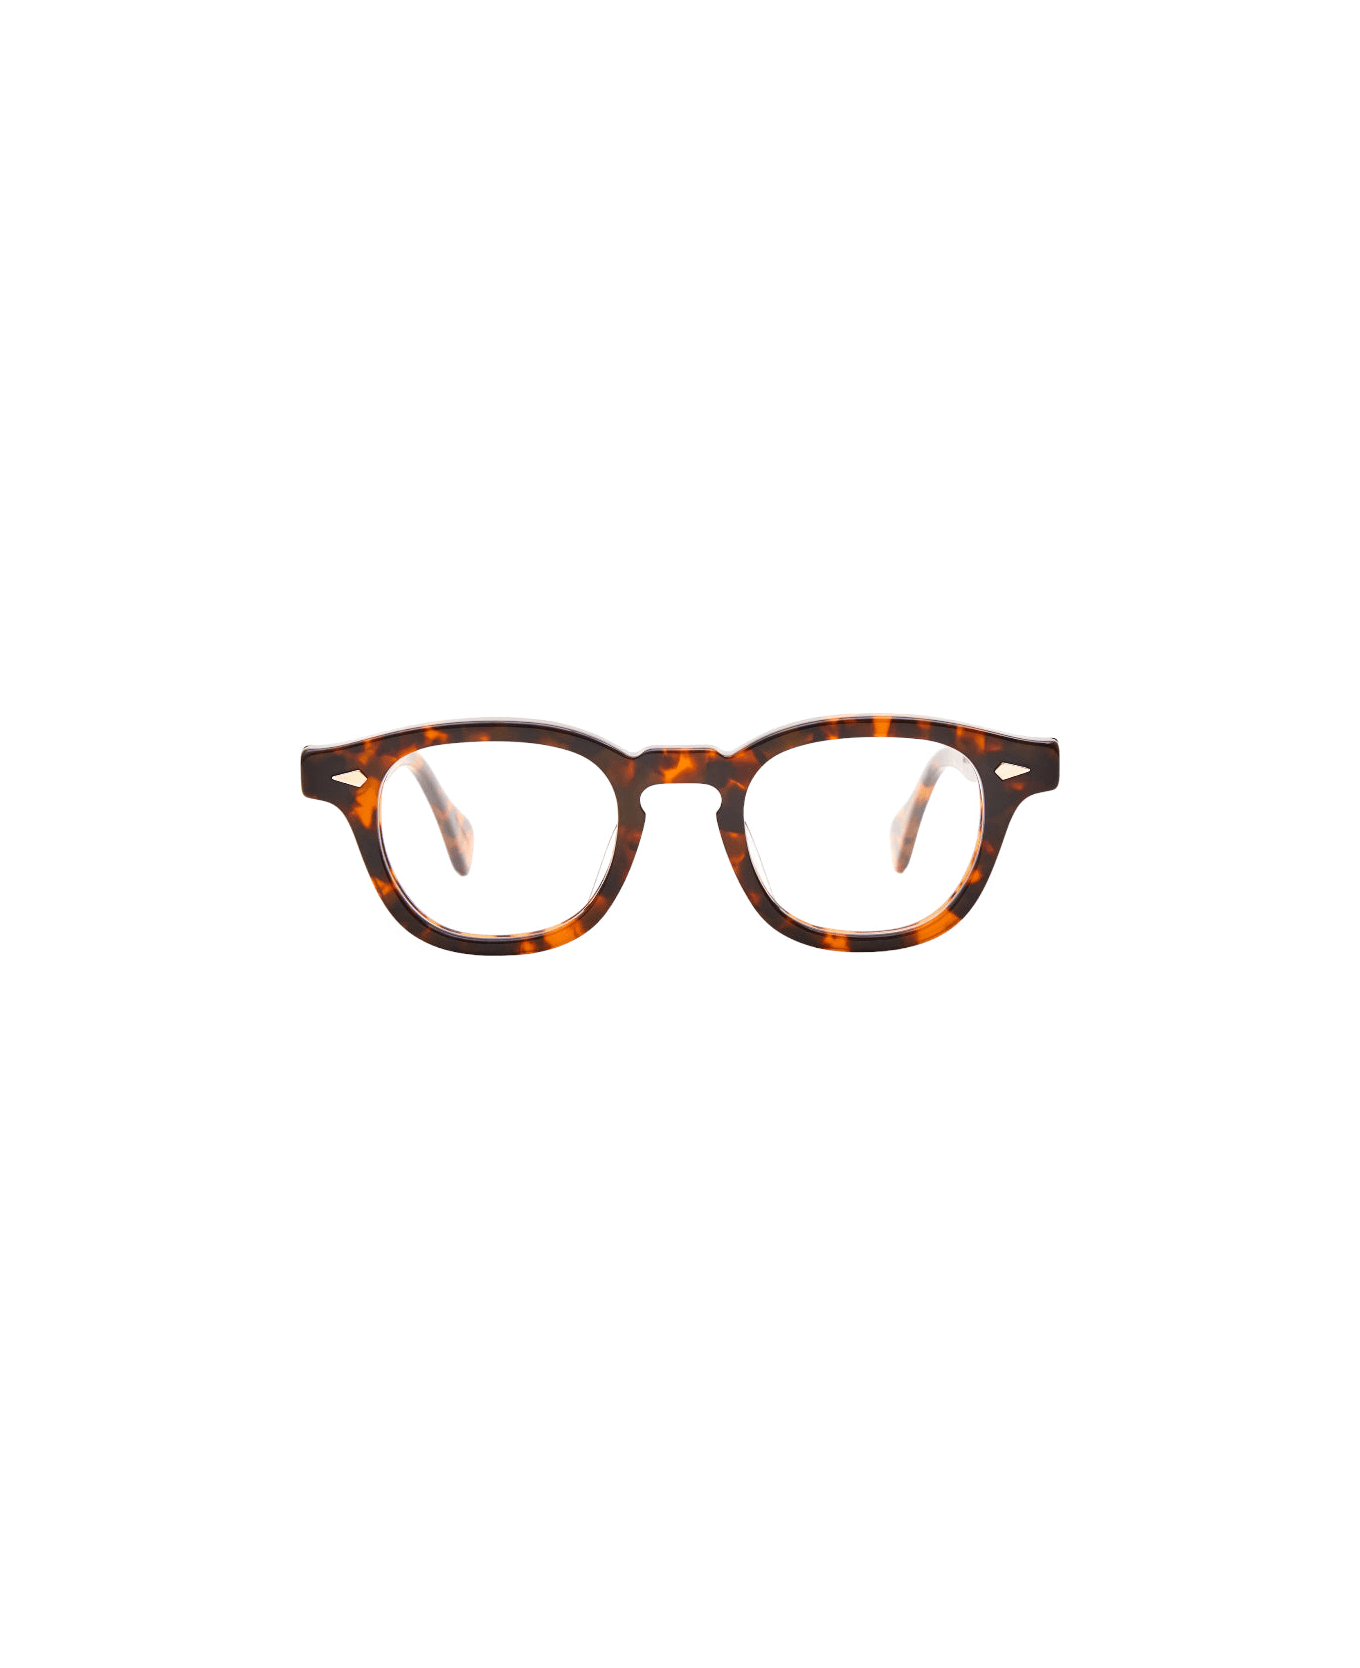 Julius Tart Optical Ar Glasses